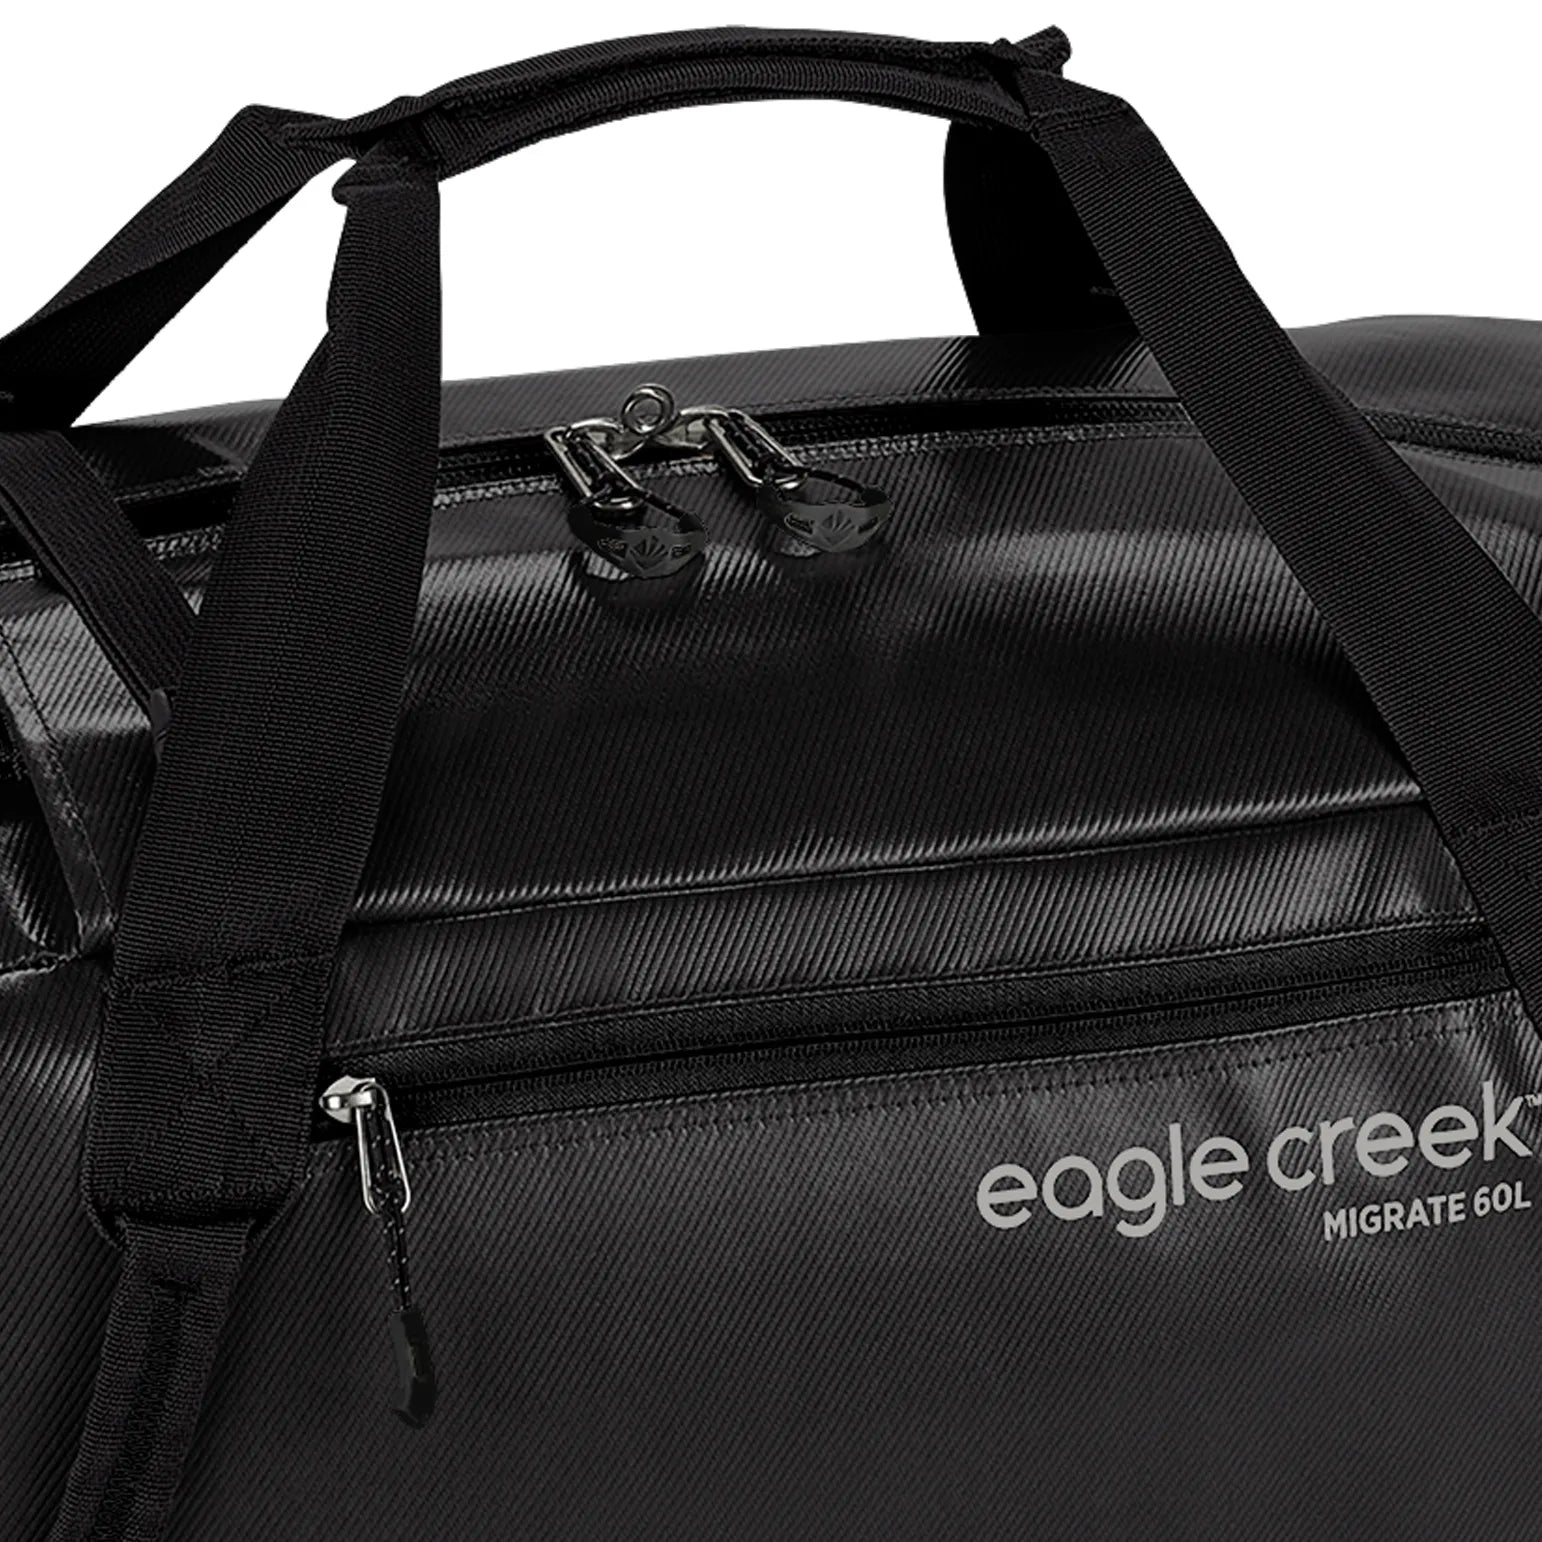 Eagle Creek Migrate sac de voyage 59 cm - noir